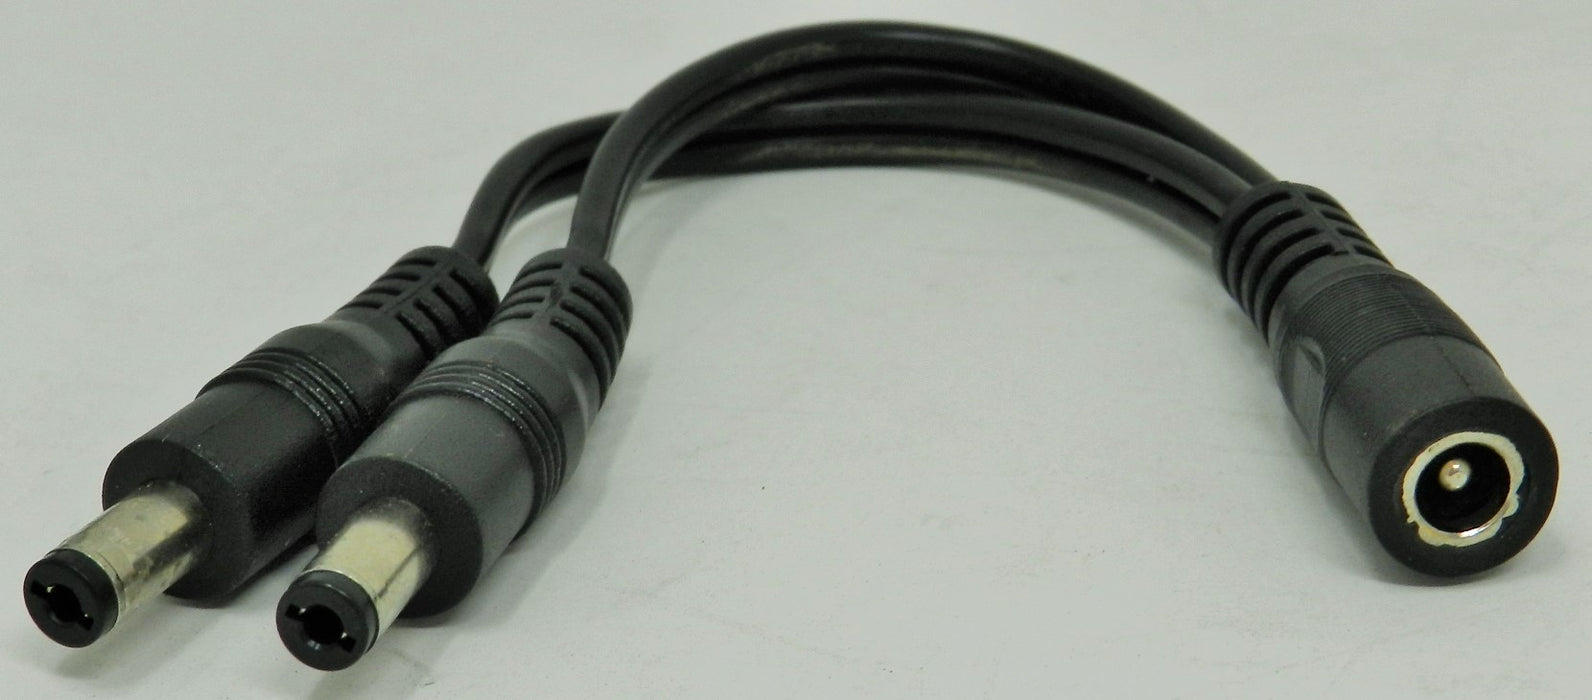 DC Power 2 Male Plug To 1 Female Jack Cable Splitter @ 2.1 x 5.5mm - AC-DC PowerShack